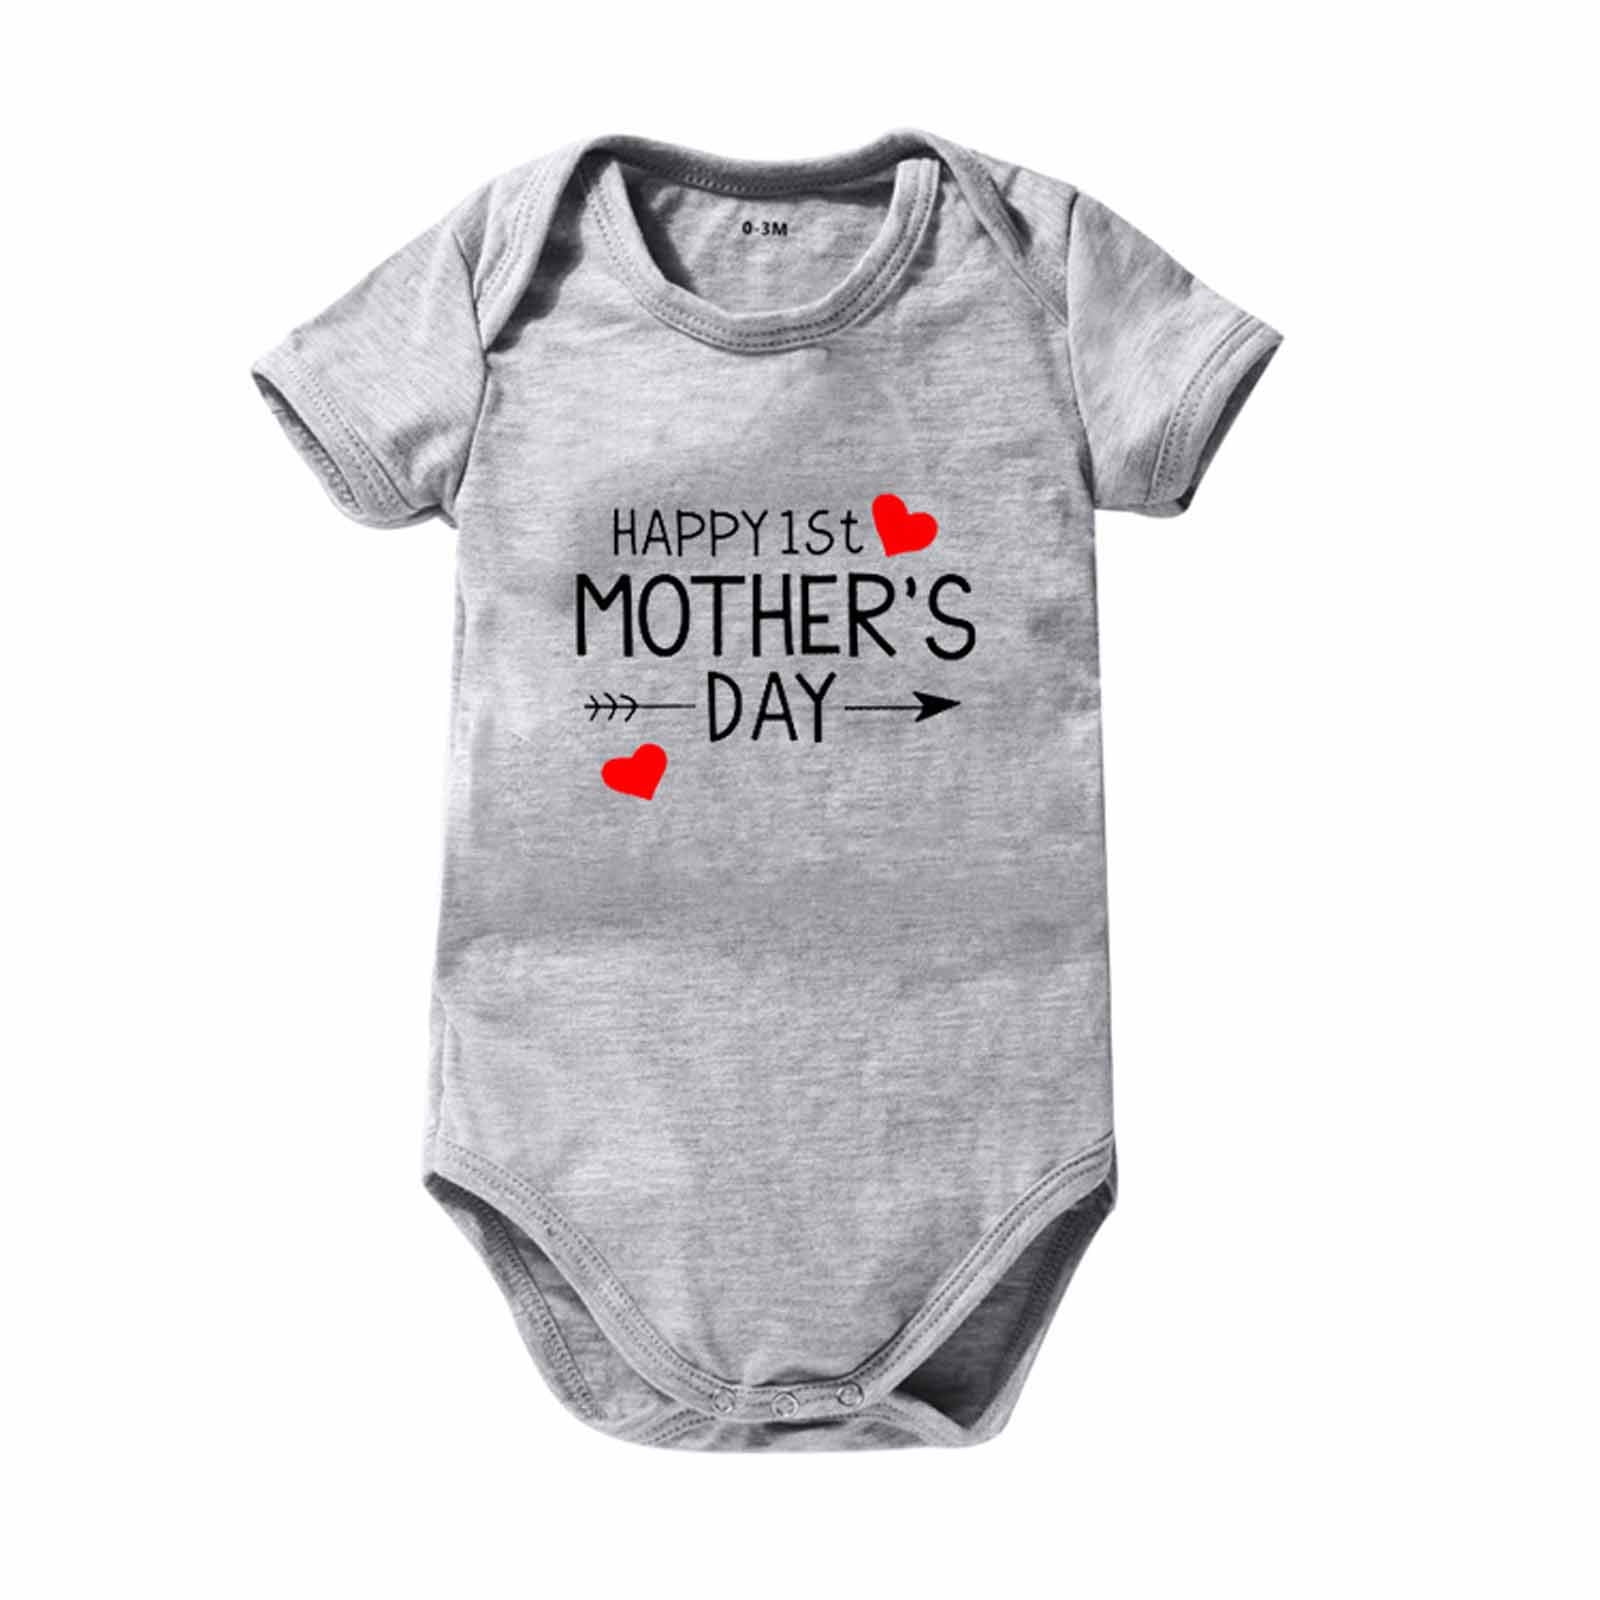 Amidoa Short Sleeve Pajamas for Kids Cotton Mother Day Pajamas Baby ...